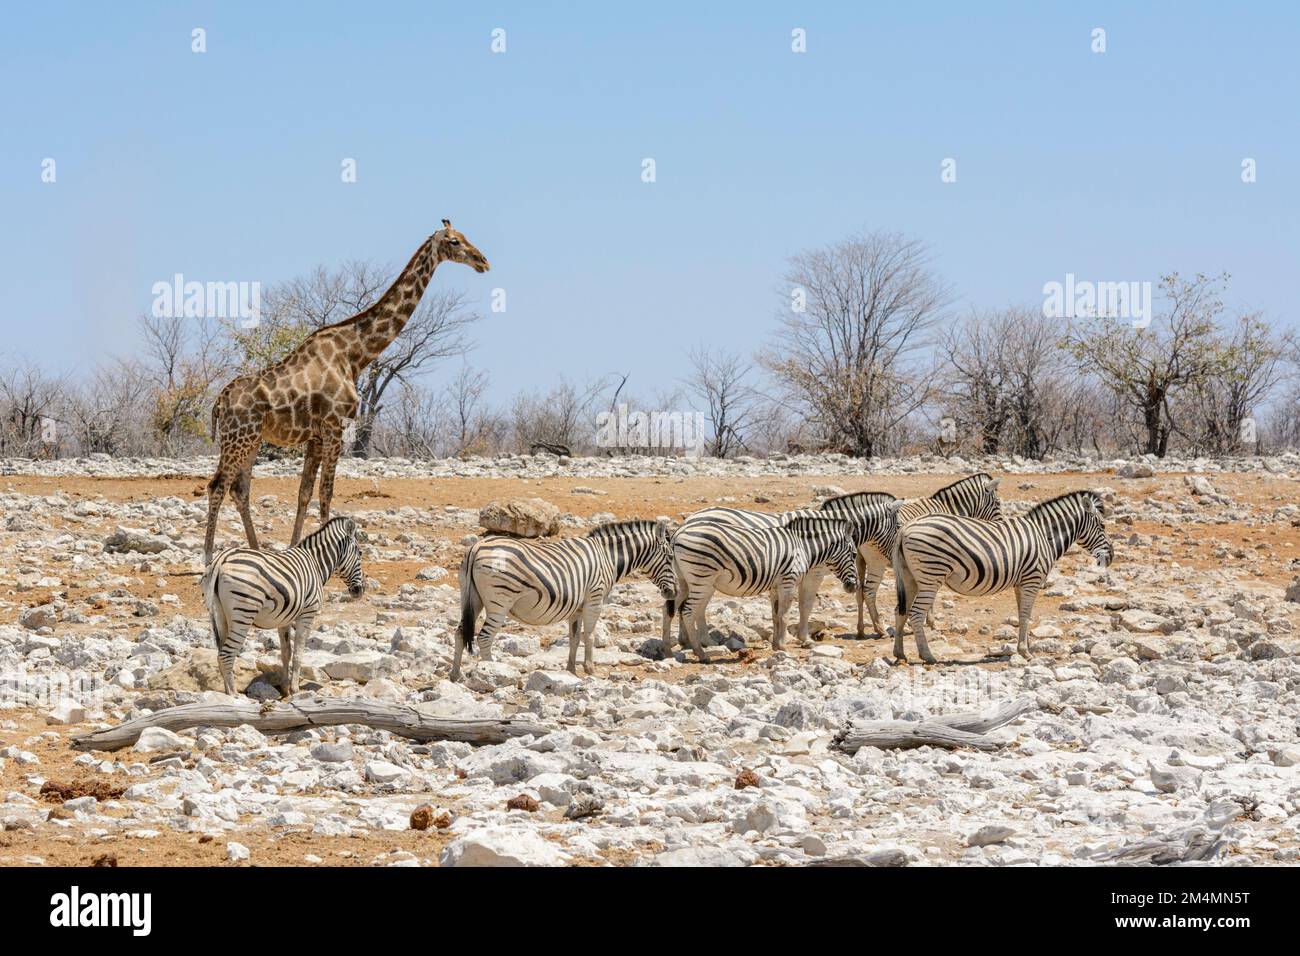 Angolan giraffe (Giraffa camelopardalis angolensis) with a herd of Burchell's zebras (Equus quagga burchelli), Etosha National Park, Namibia Stock Photo